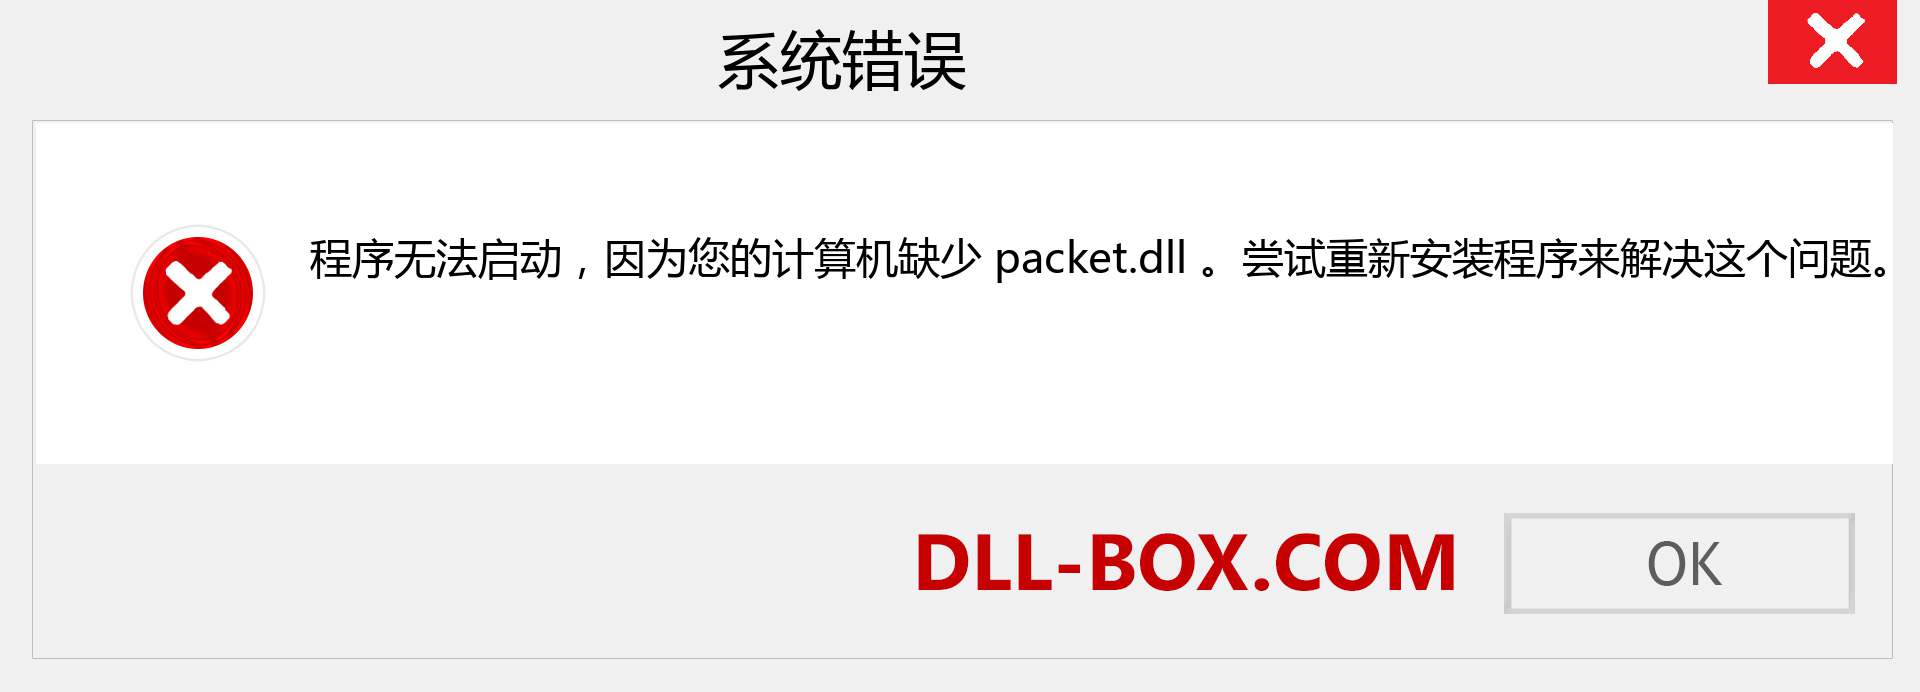 packet.dll 文件丢失？。 适用于 Windows 7、8、10 的下载 - 修复 Windows、照片、图像上的 packet dll 丢失错误